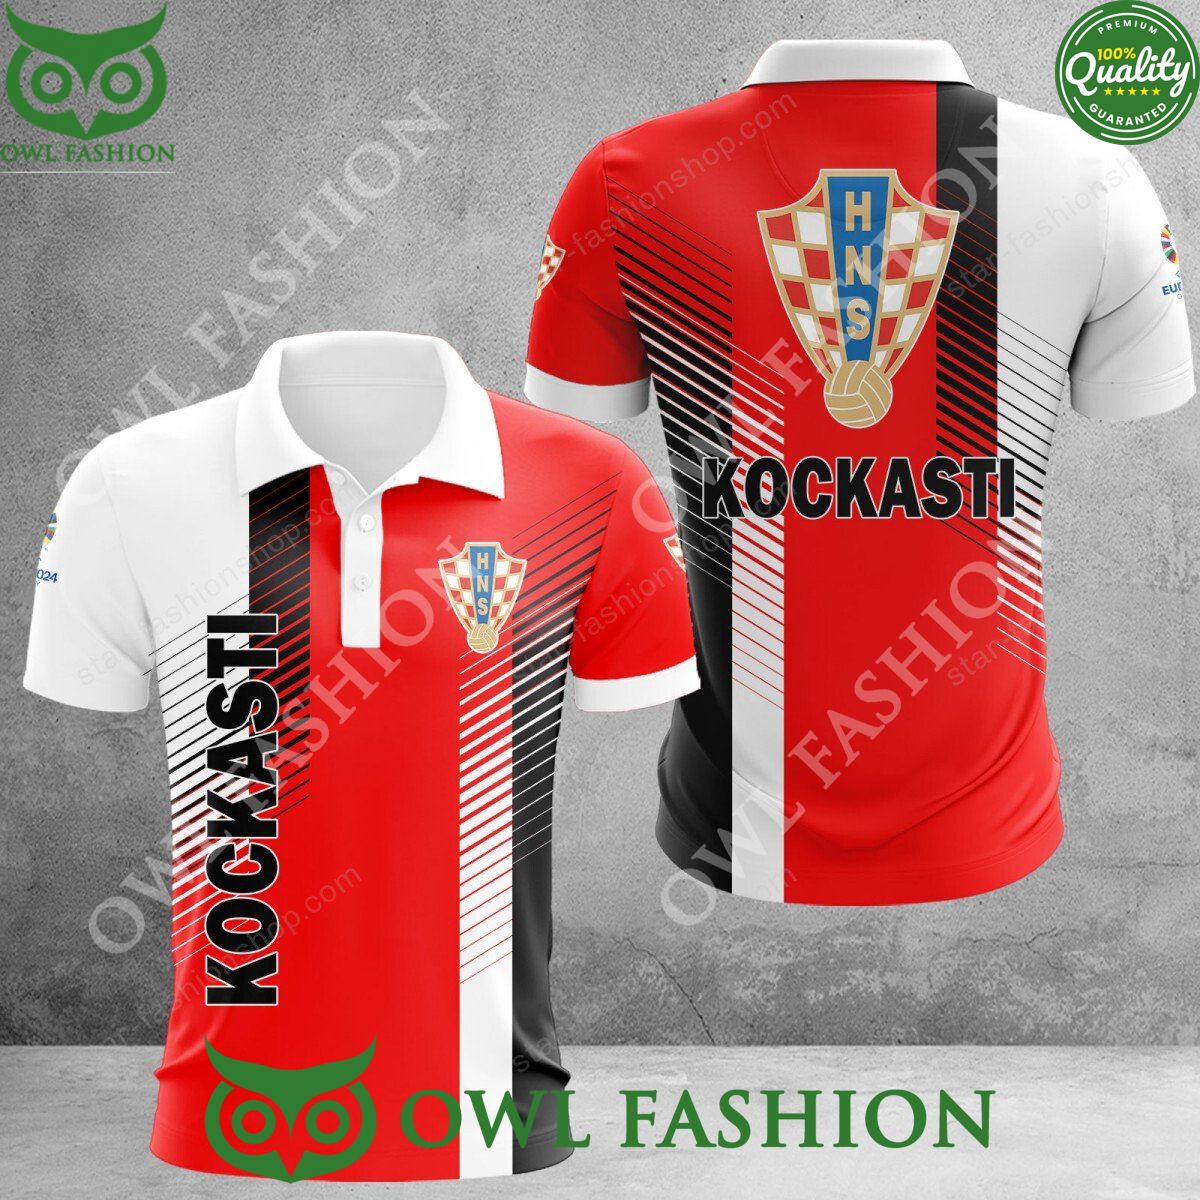 croatia national football team logo white black red 3d shirt printed 1 L6AlZ.jpg